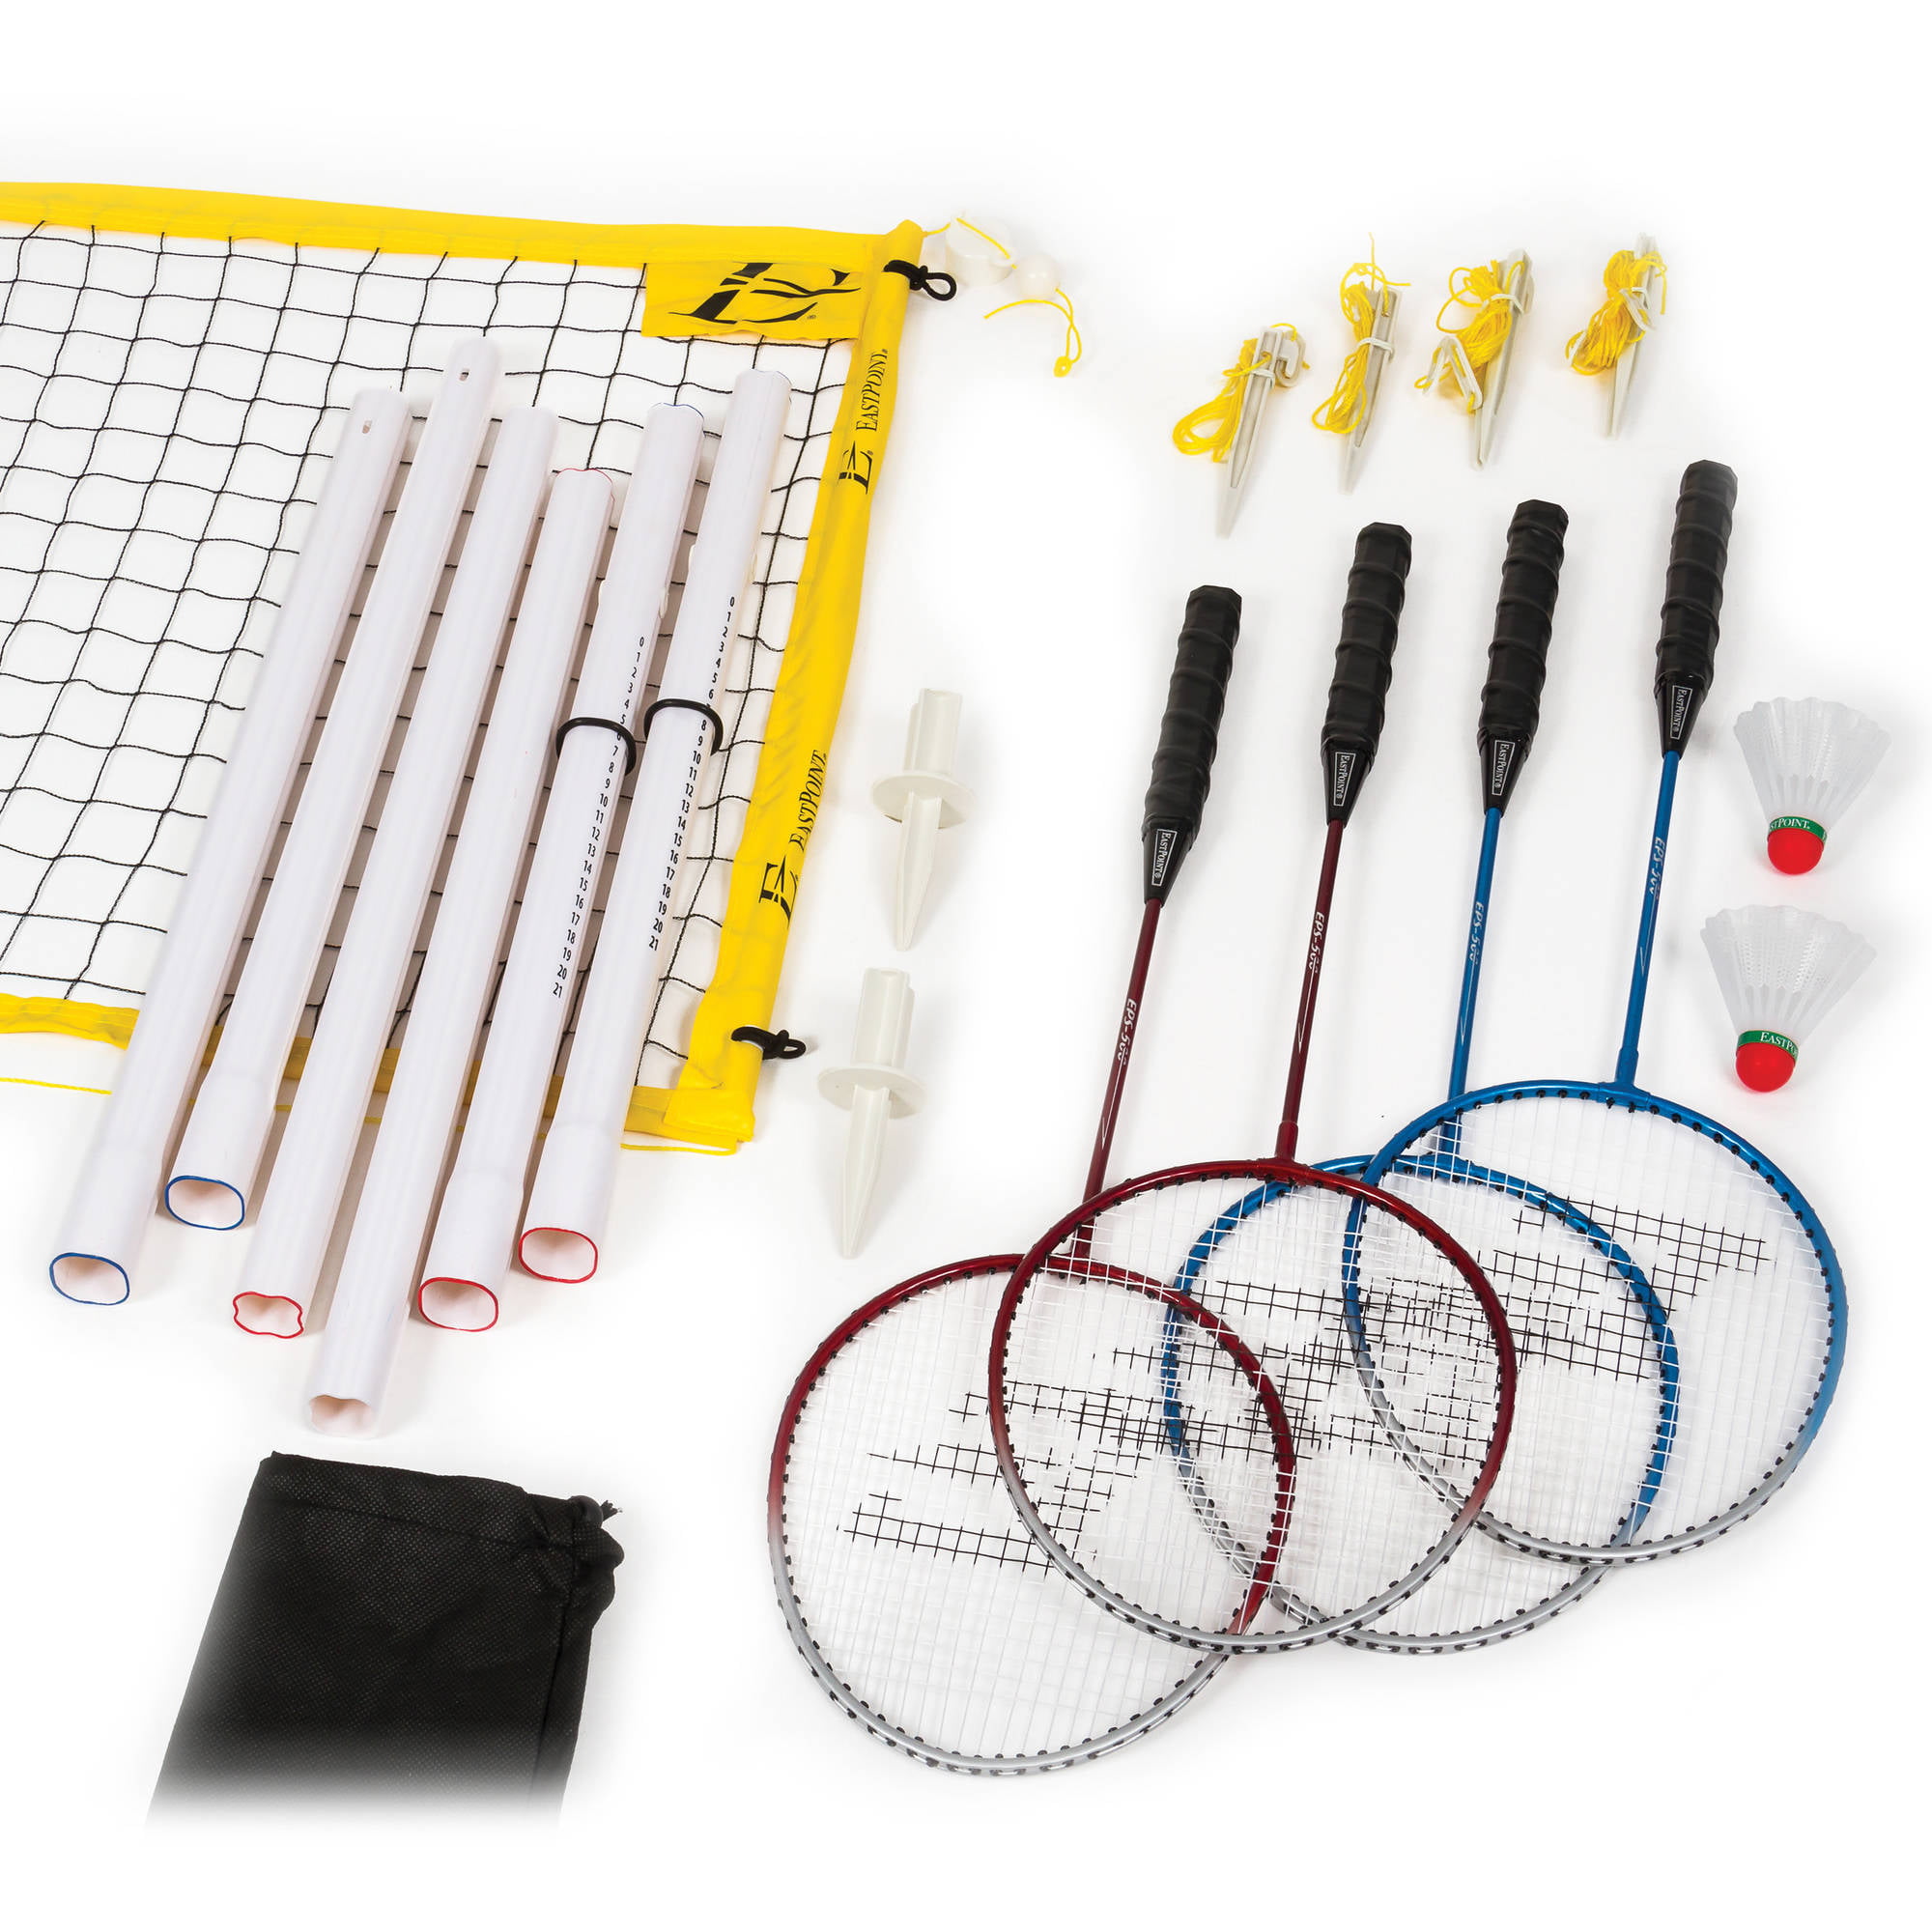 Eastpoint Easy Set Up Badminton Set (Unboxing, Set Up, Review) 